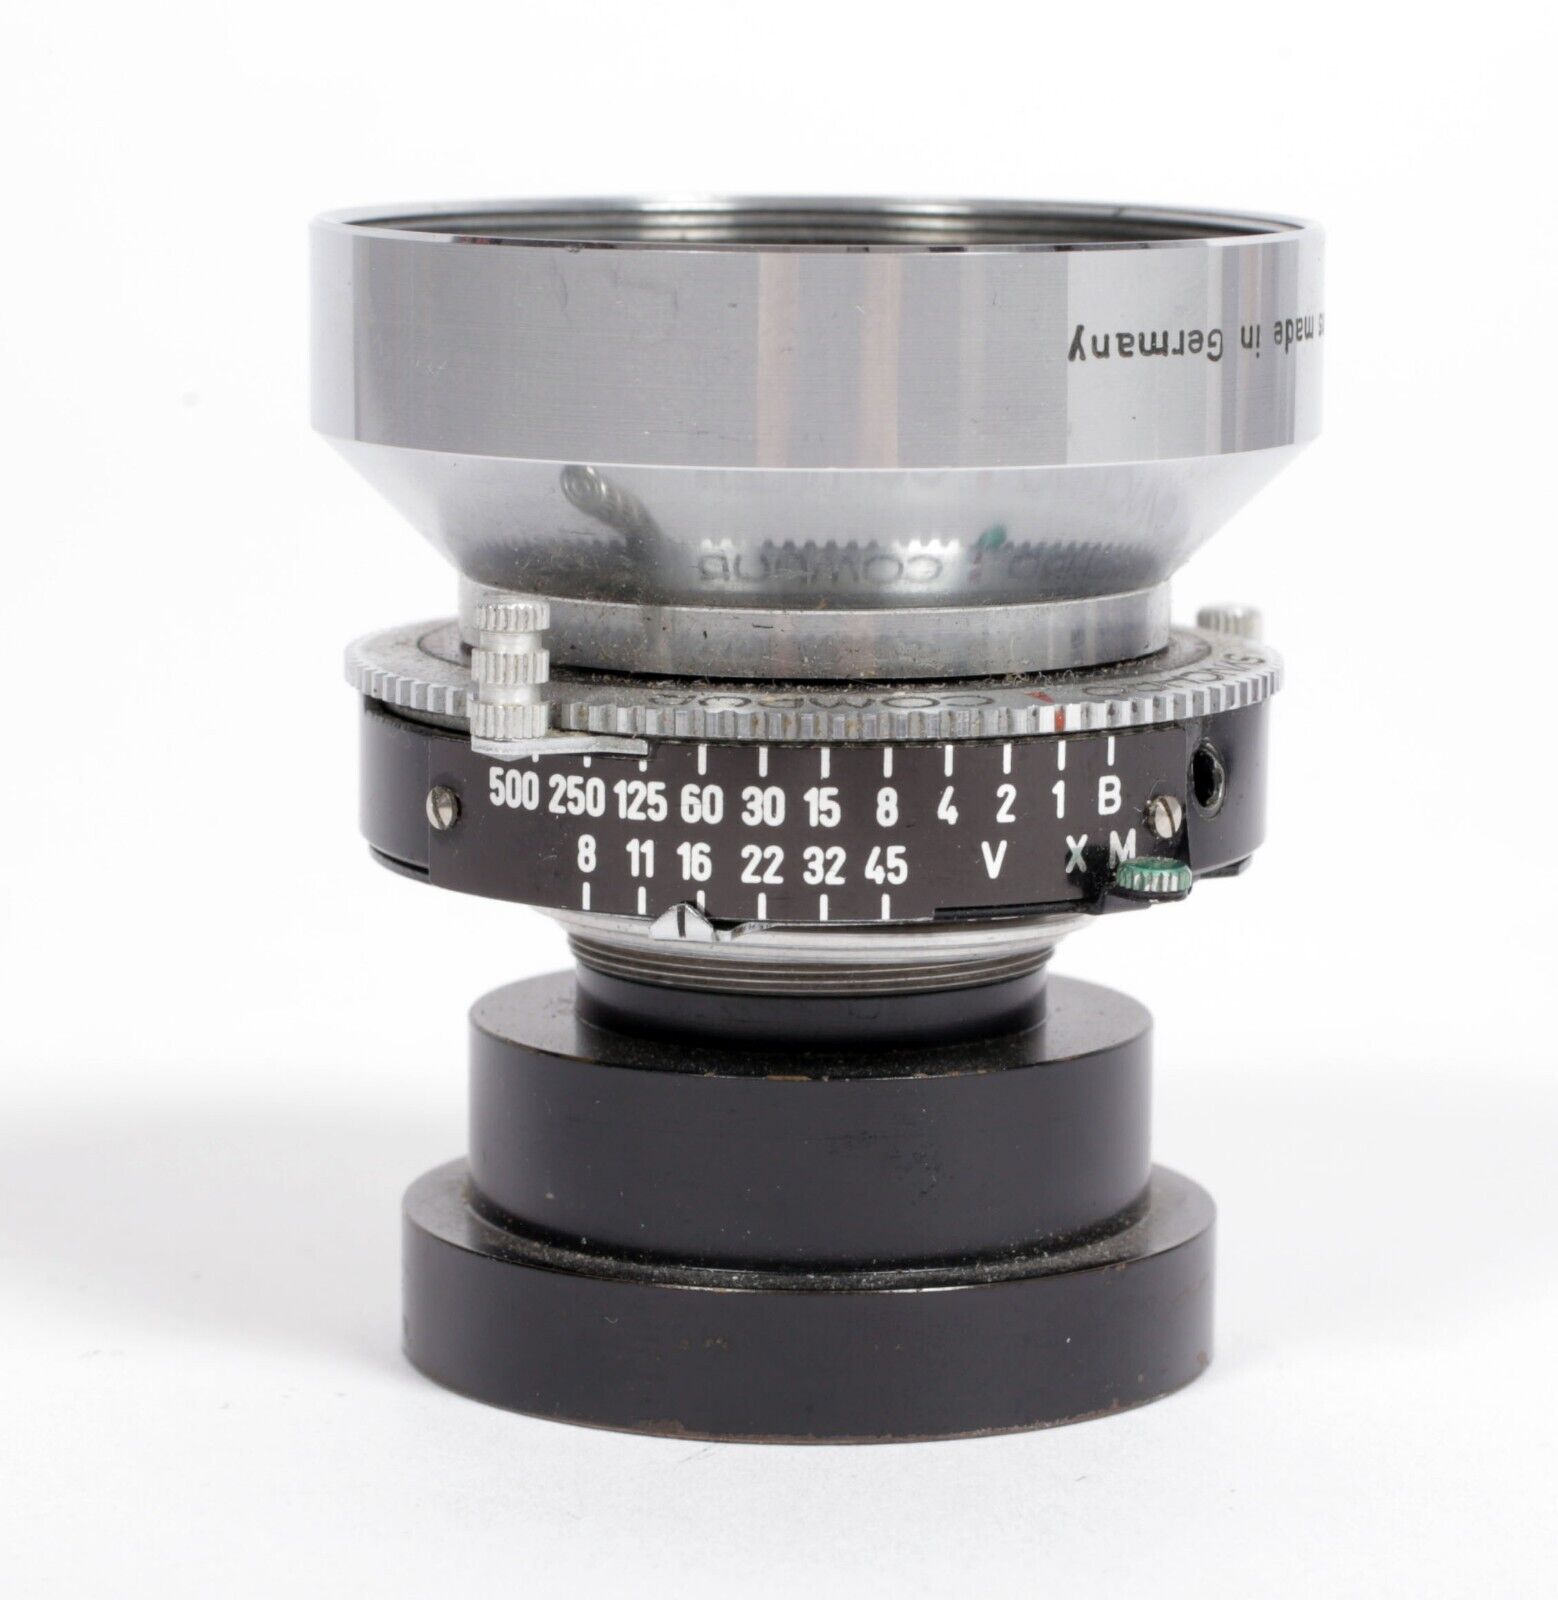 Schneider Super Angulon 65mm F8 lens in Compur #00 (#440)